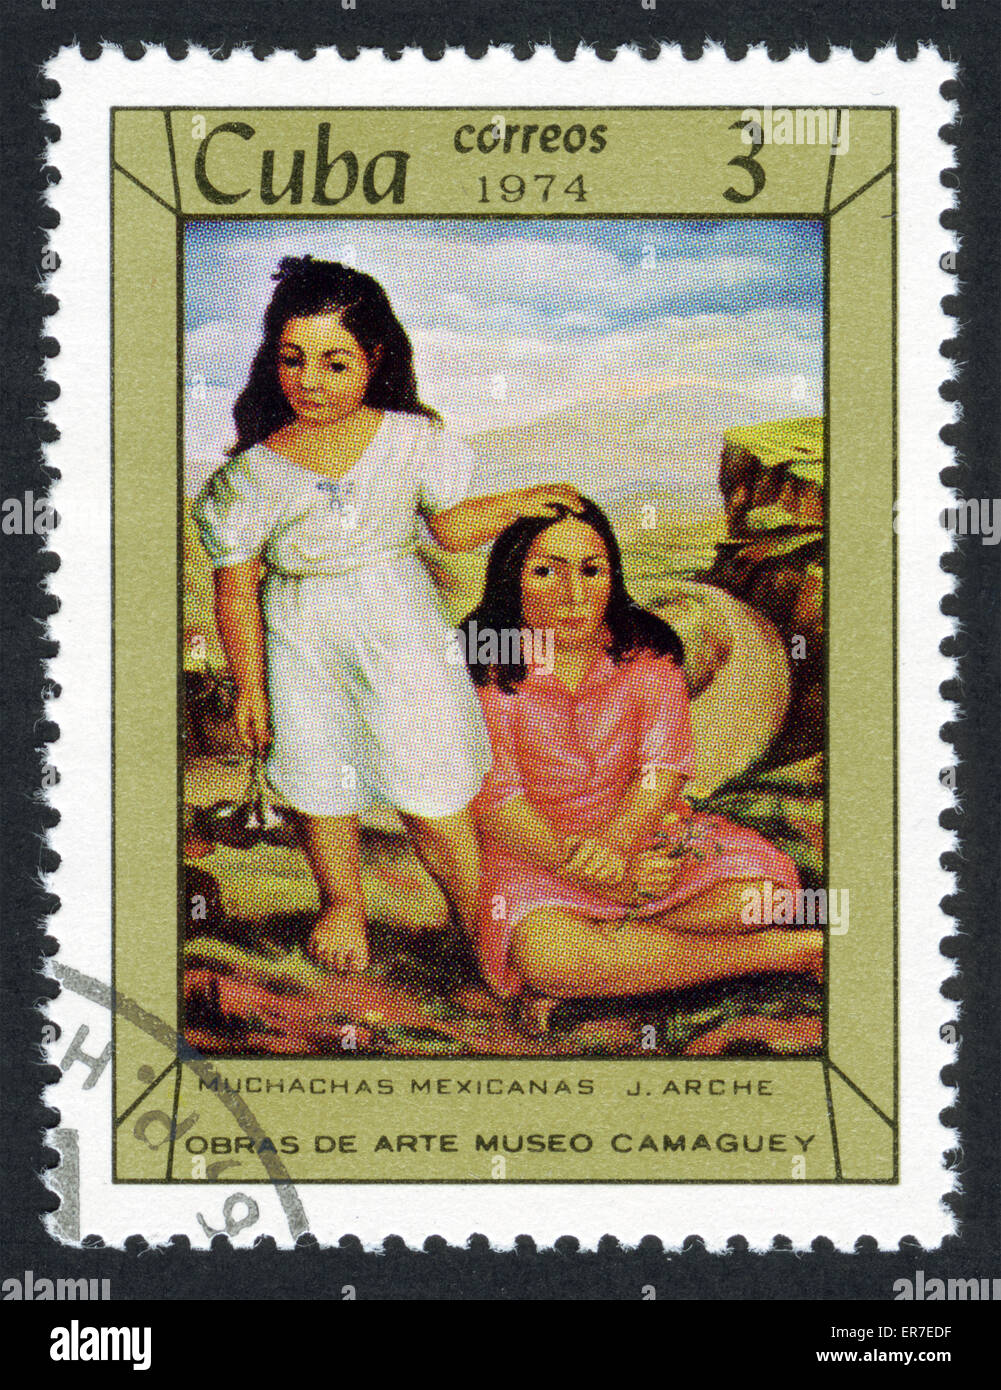 Cuba,1974 year,post mark,stamp,Cuban art, Painting Stock Photo